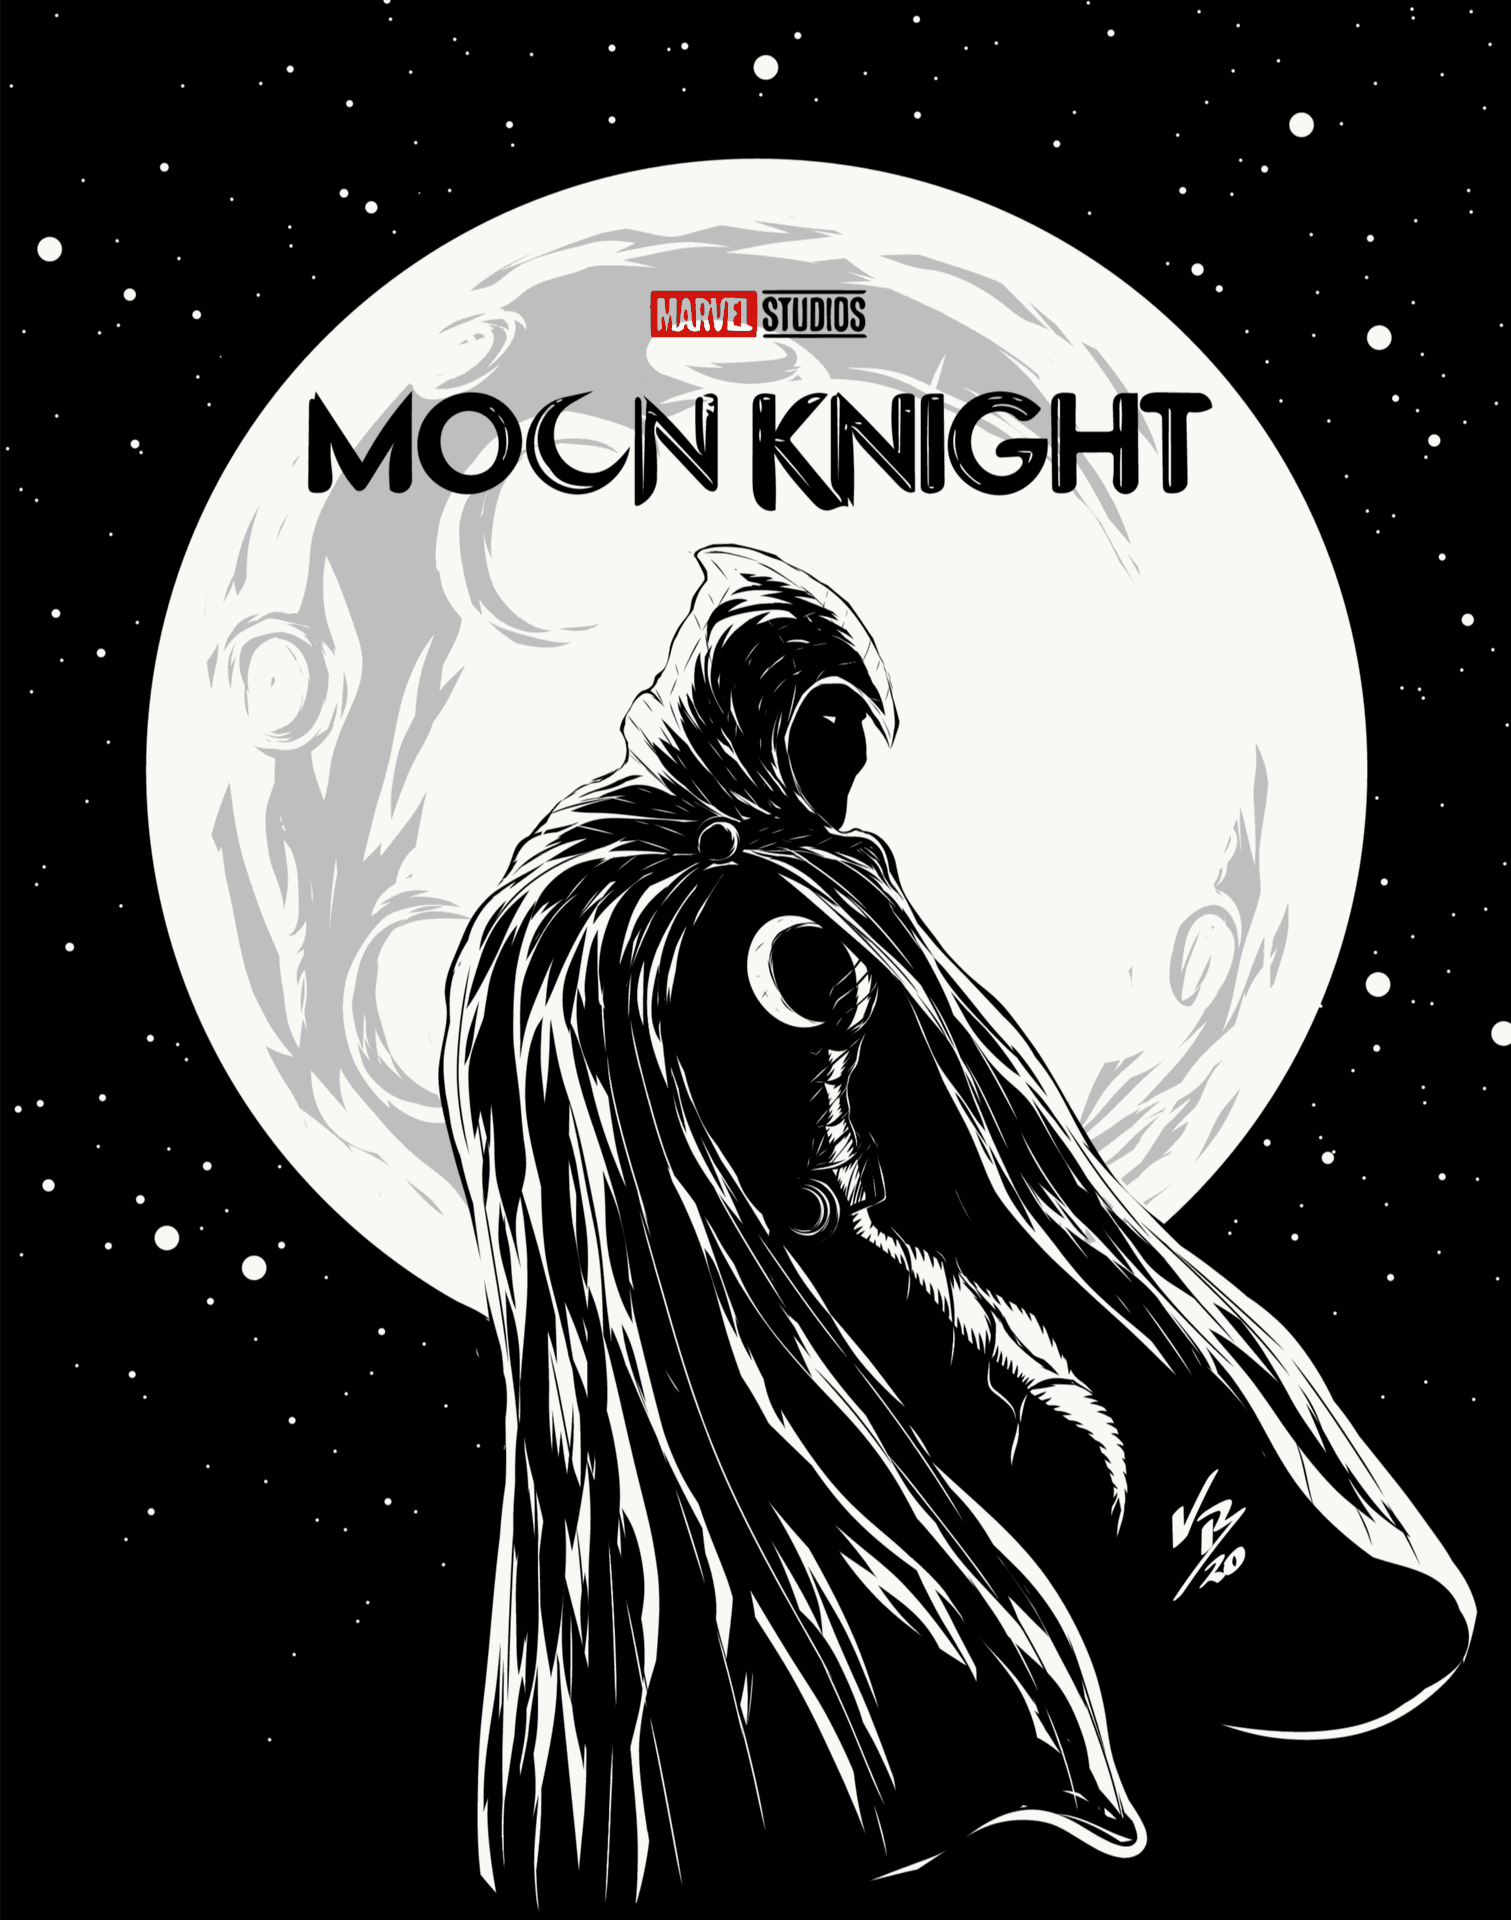 The mysterious superhero Moon Knight patrols the night